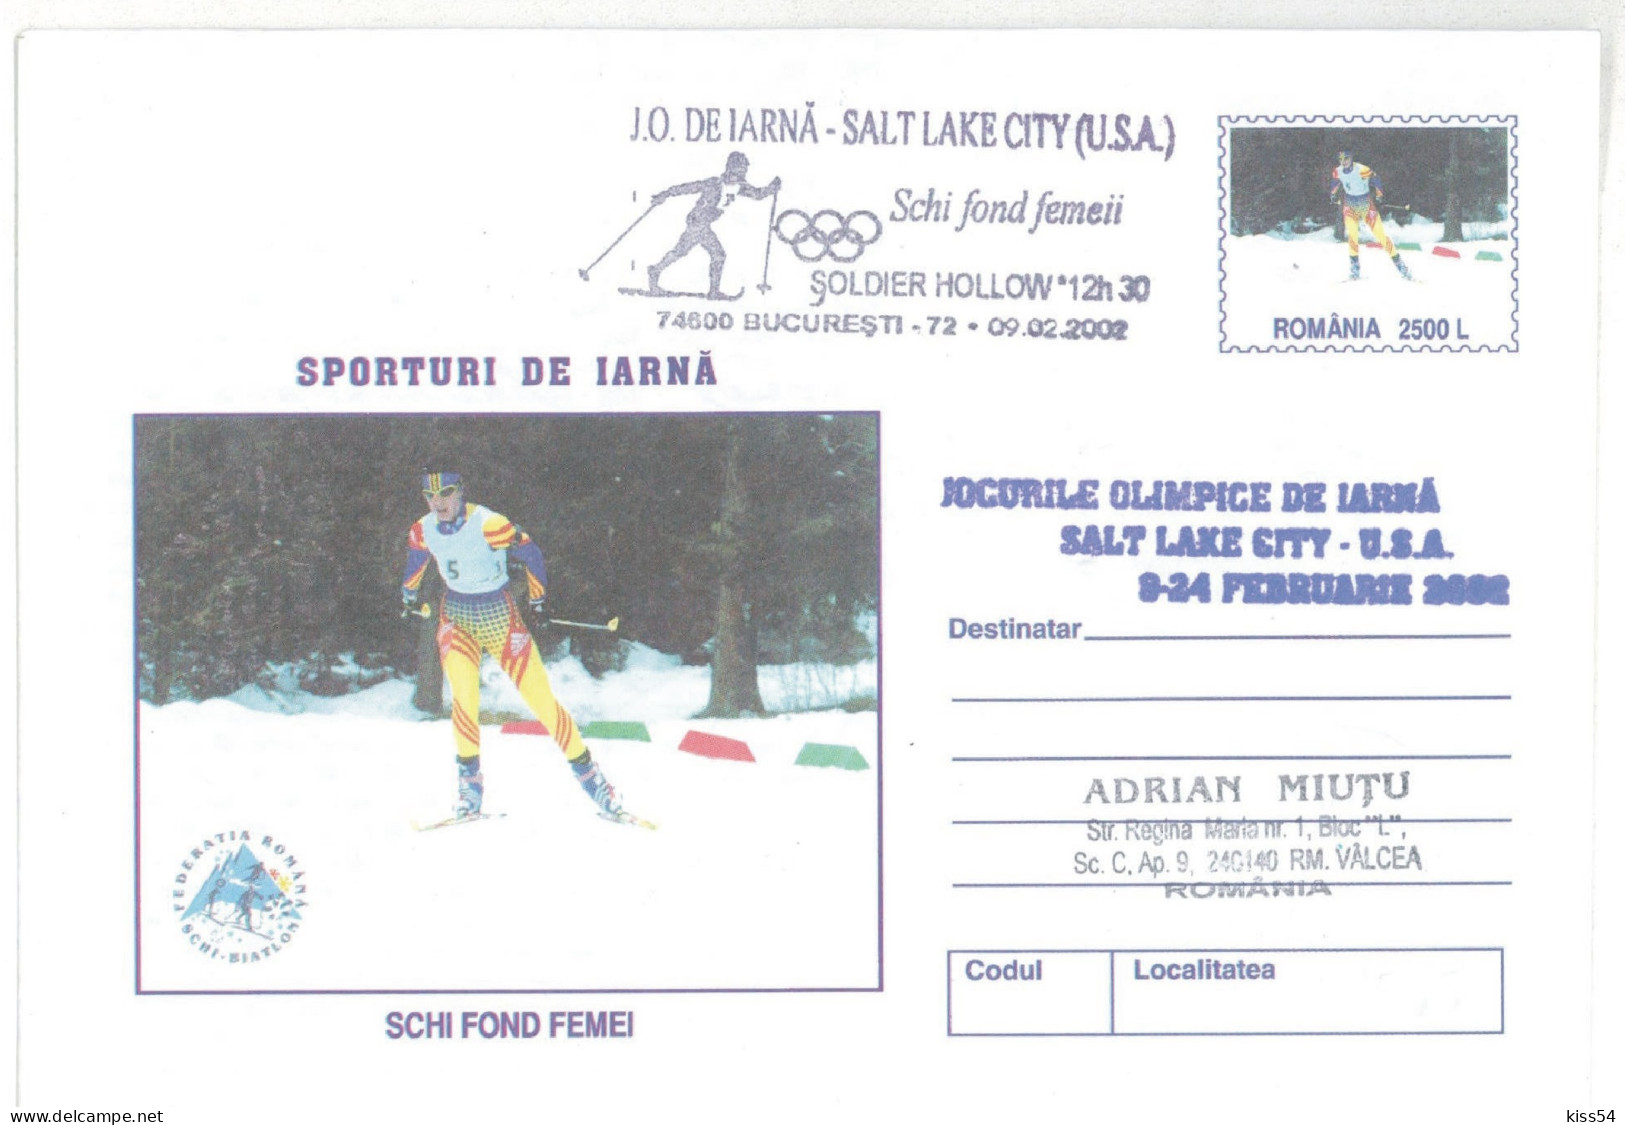 IP 2001 - 0234c U. S. A. SALT LAKE CITY 2002 - SKI Women - Winter Olympic Games - Stationery - Used - 2001 - Invierno 2002: Salt Lake City